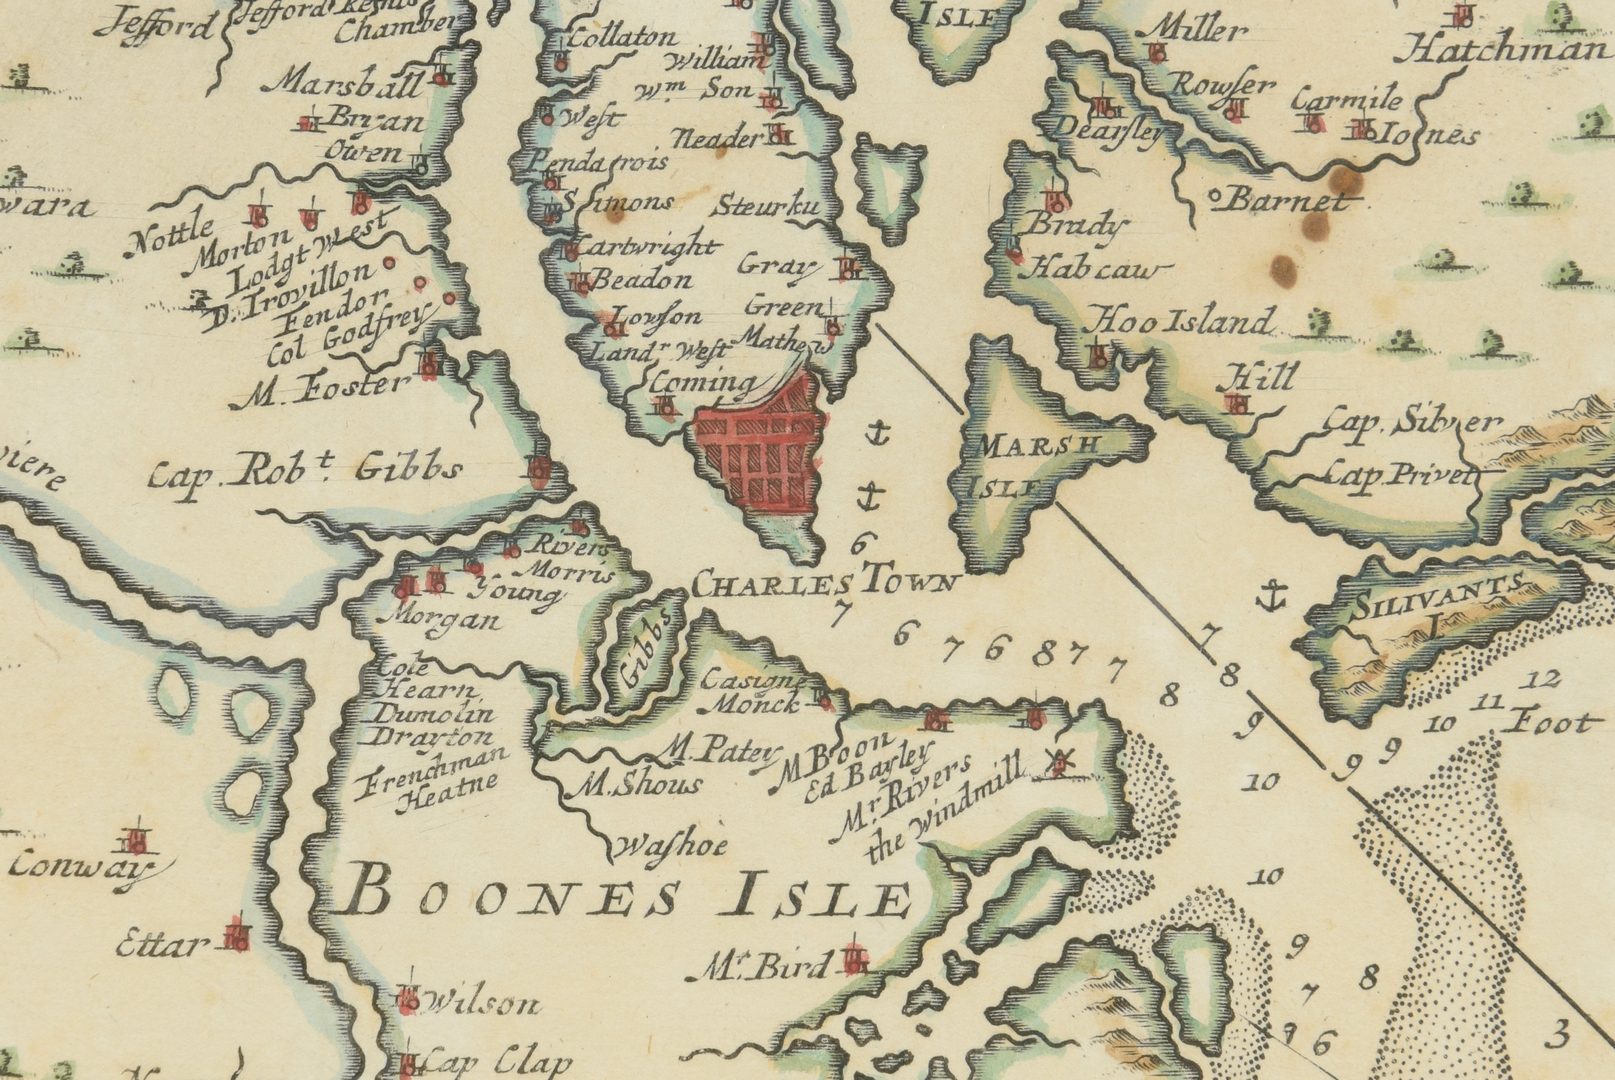 1696 North South Carolina area around Charleston very early map 21856 